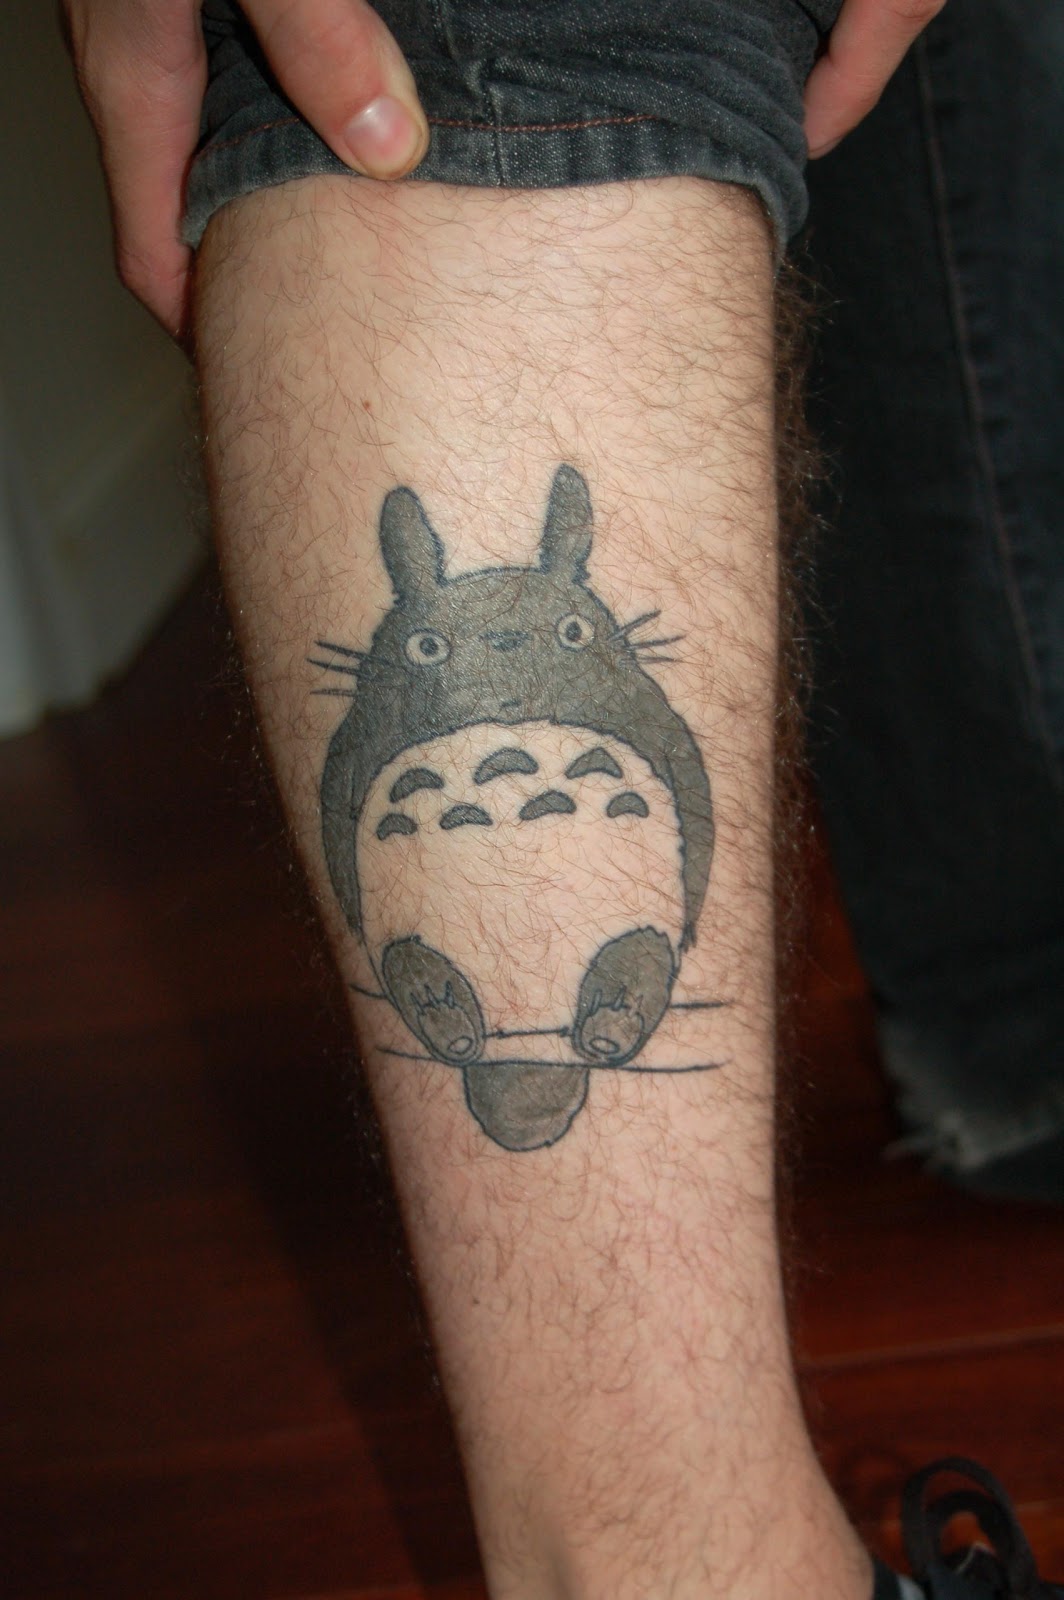 Tatouage Totoro ordinaire qui est très beau